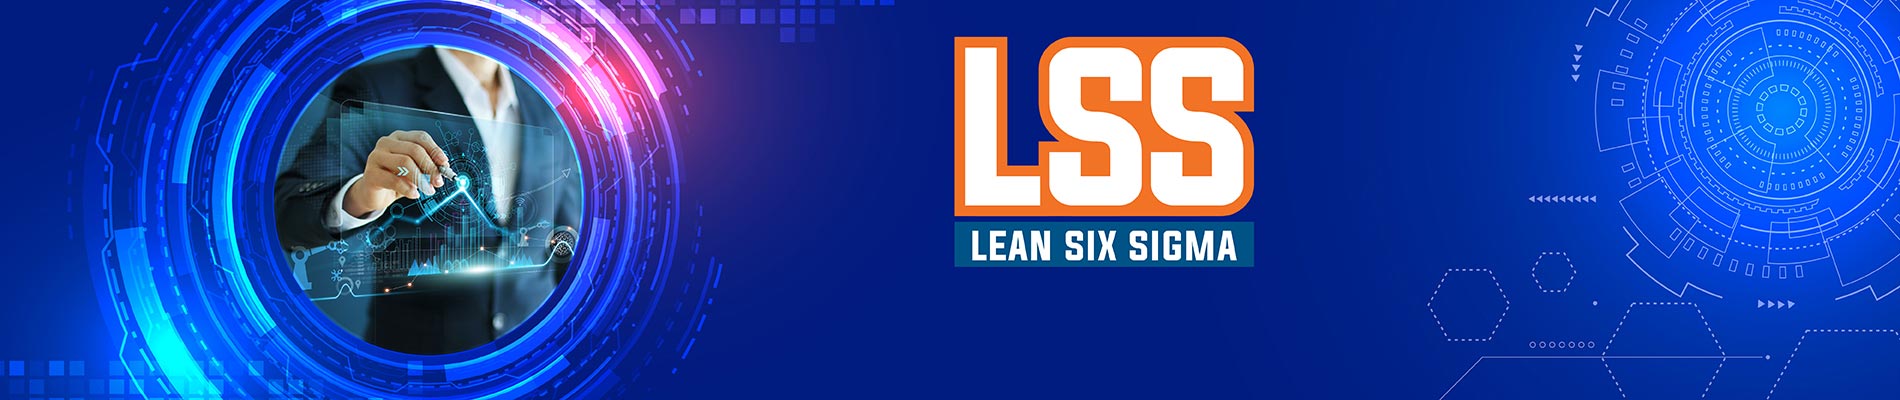 LSS - Lean Six Sigma